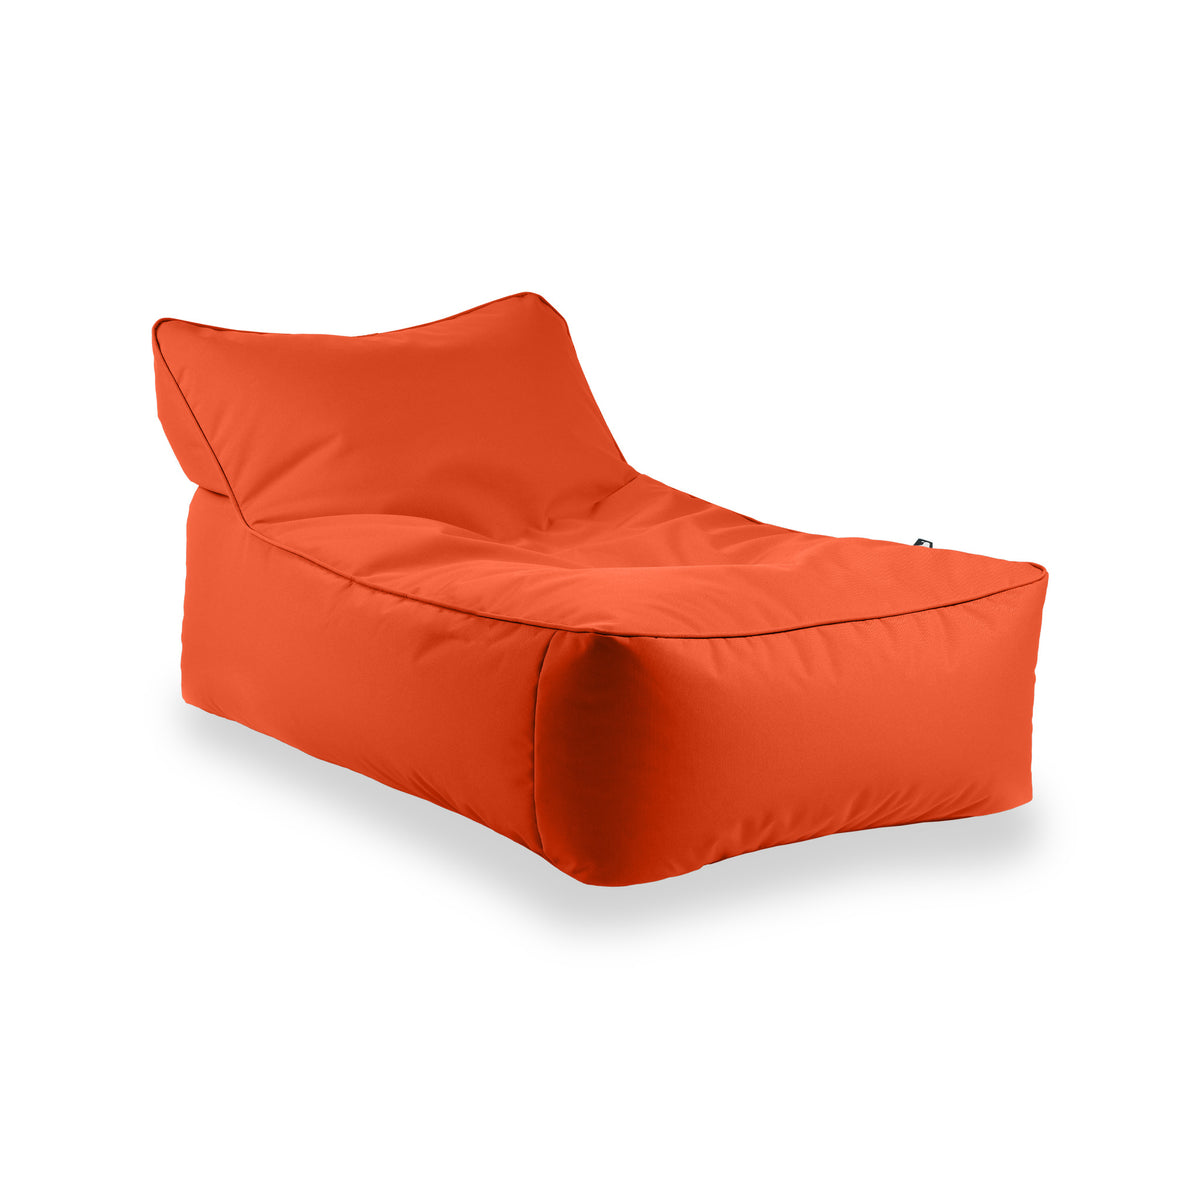 B Bean Bed in Orange from Roseland Furniture